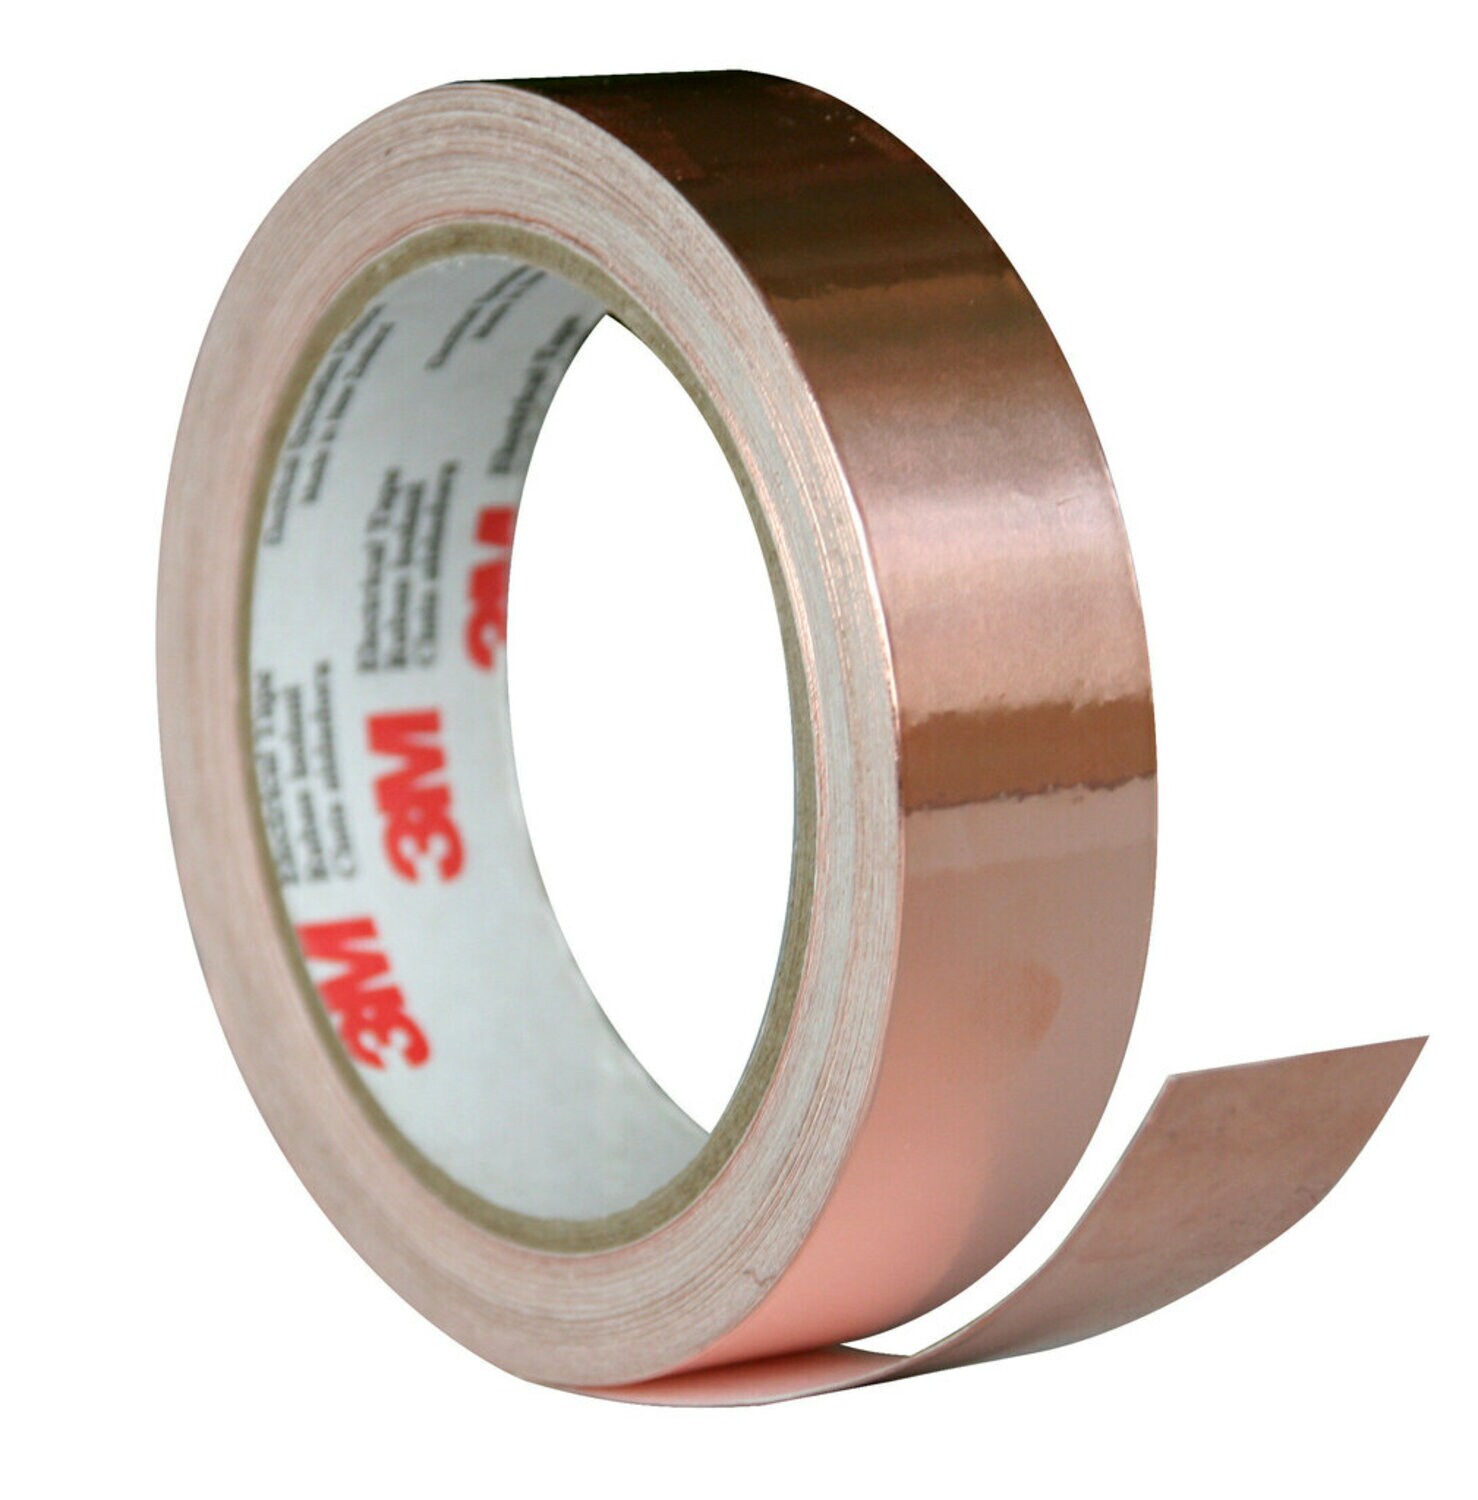 7100050420 - 3M Copper Foil EMI Shielding Tape 1181, 7.7 in X 10 in sheet, 10
Sheets/Bag